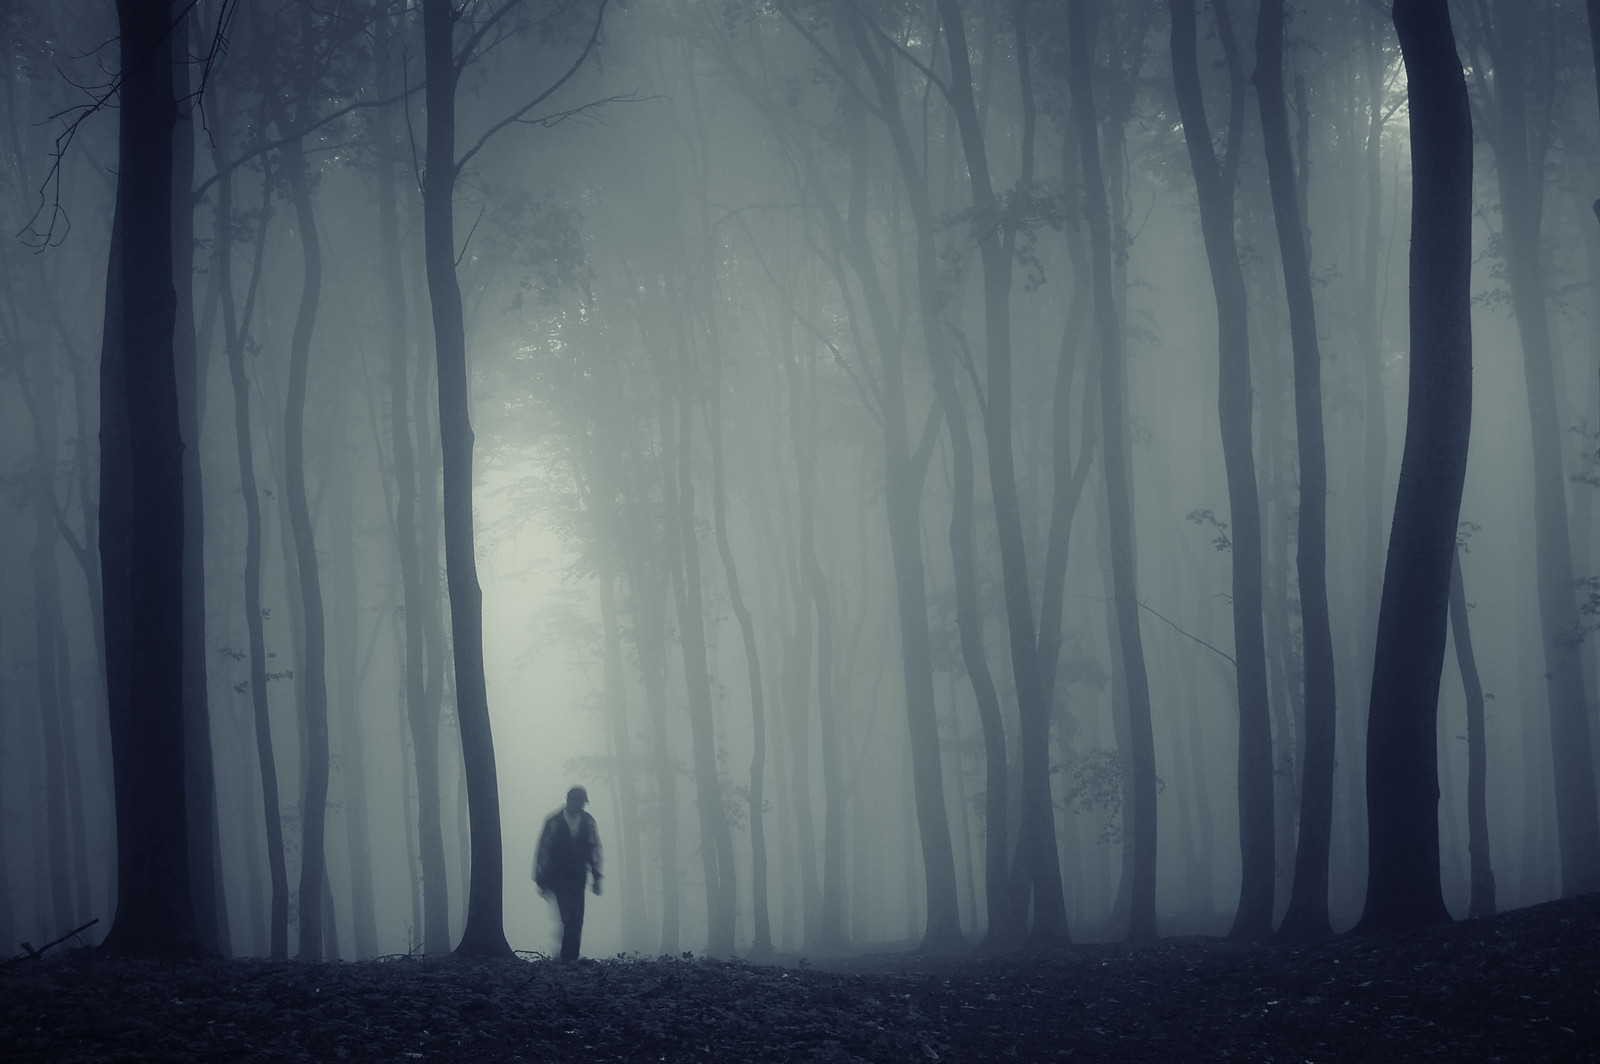 Man in a dark forest with fog